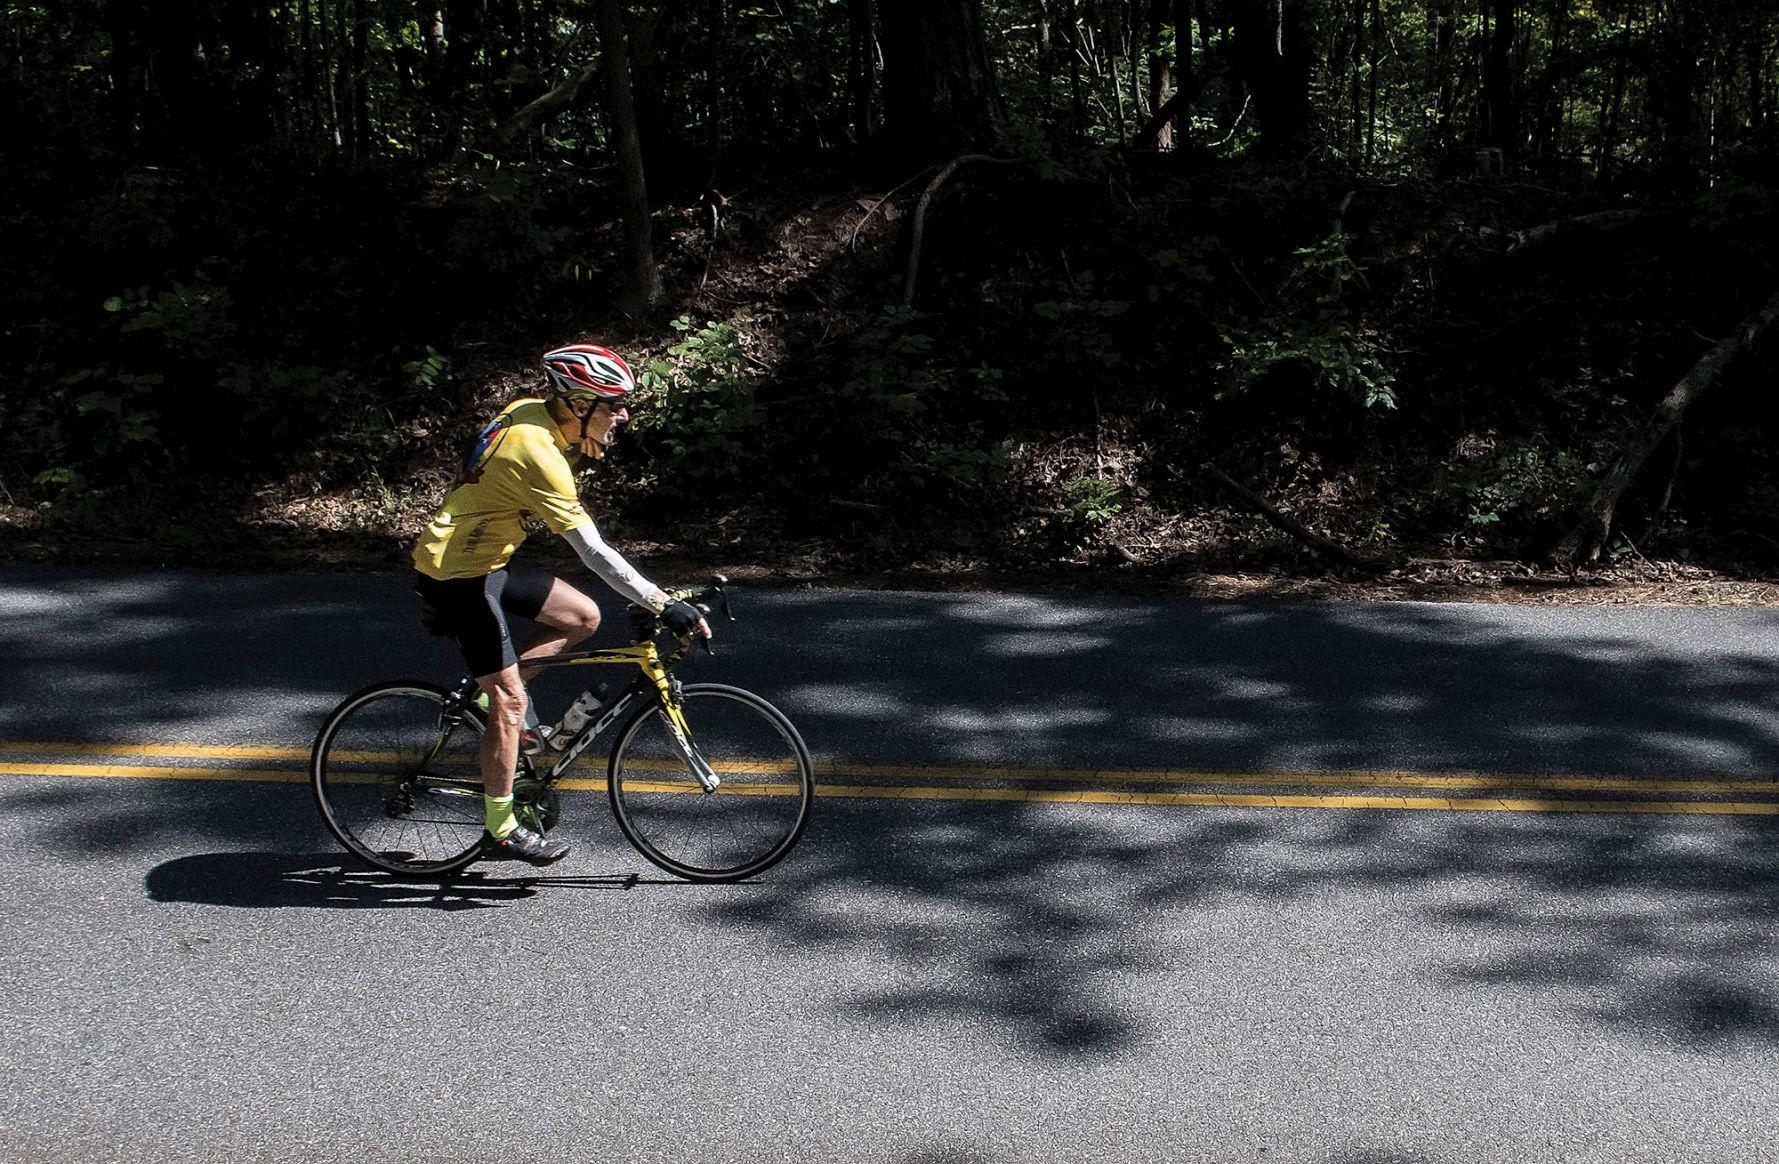 PHOTOS 2018 Cycle North Carolina Mountains to Coast rolls through our